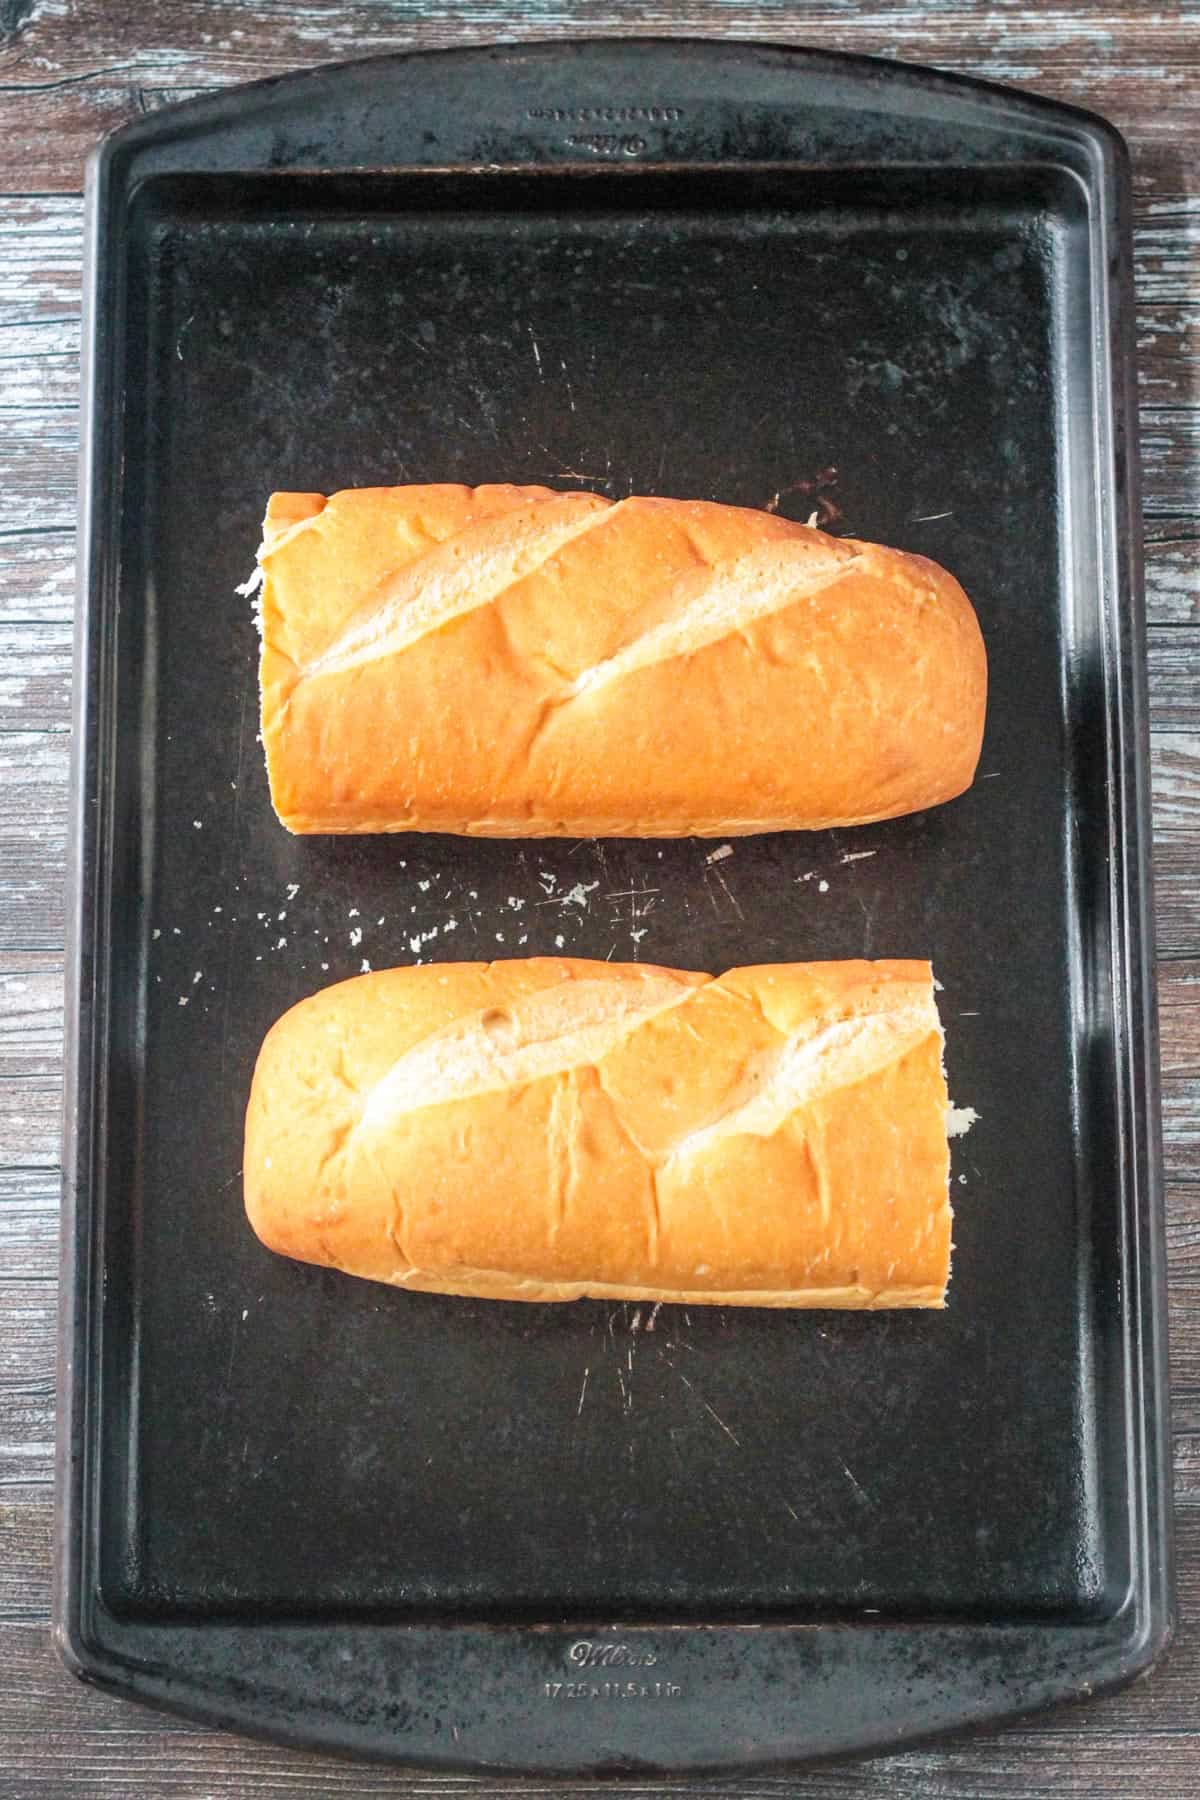 French loaf cut in half.